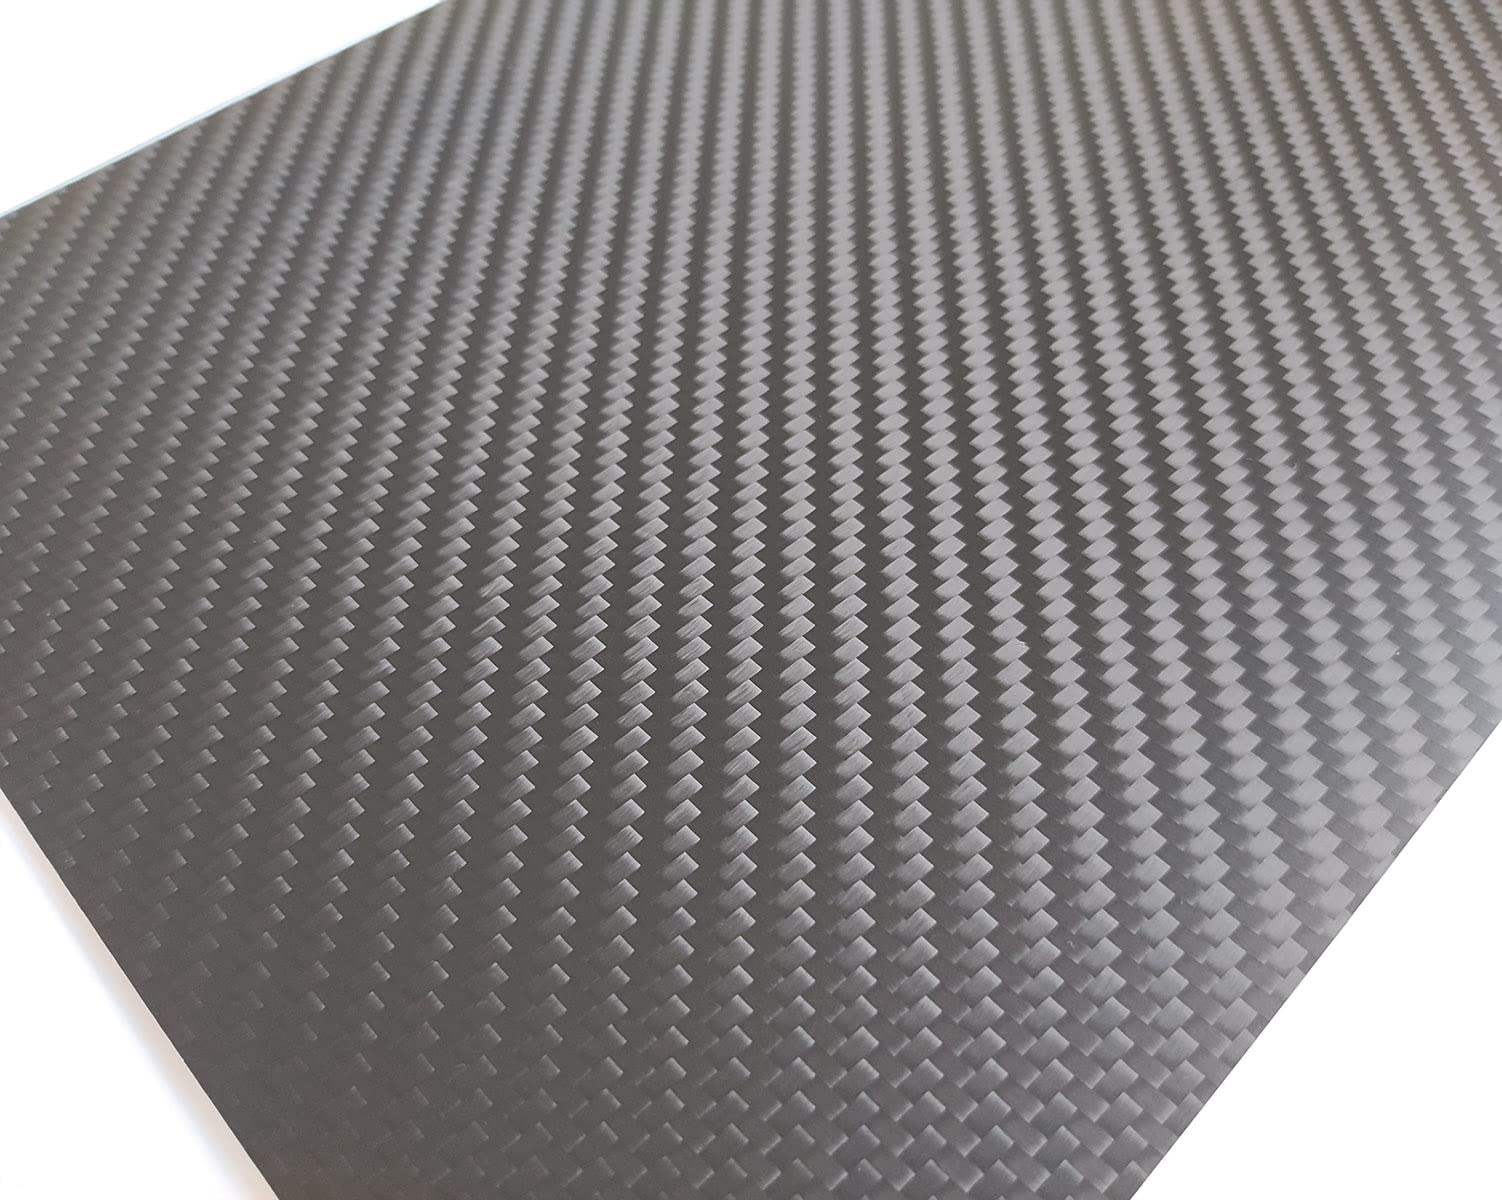 Cncarbonfiber 15Mm 200X300Mm 100 Carbon Fiber Sheet Laminate Board Plate Panel 3K Twill Matte Finish